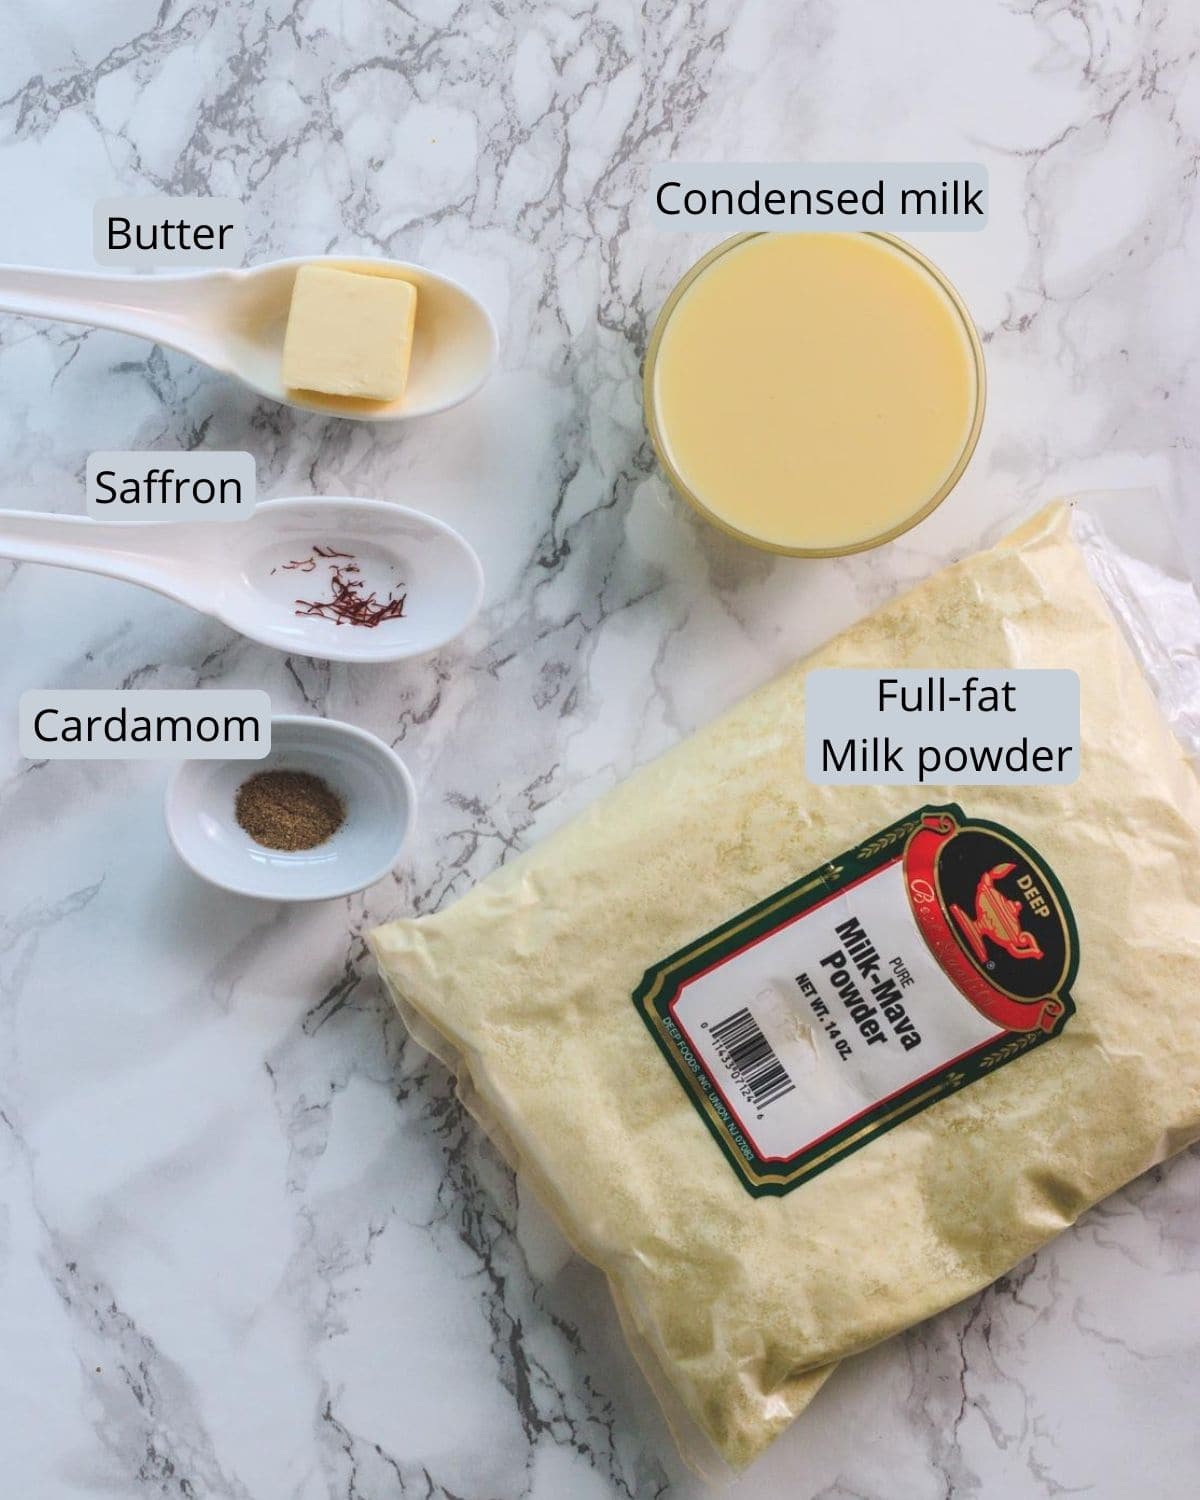 ingredients used in peda includes condensed milk, milk powder, butter, saffron, cardamom